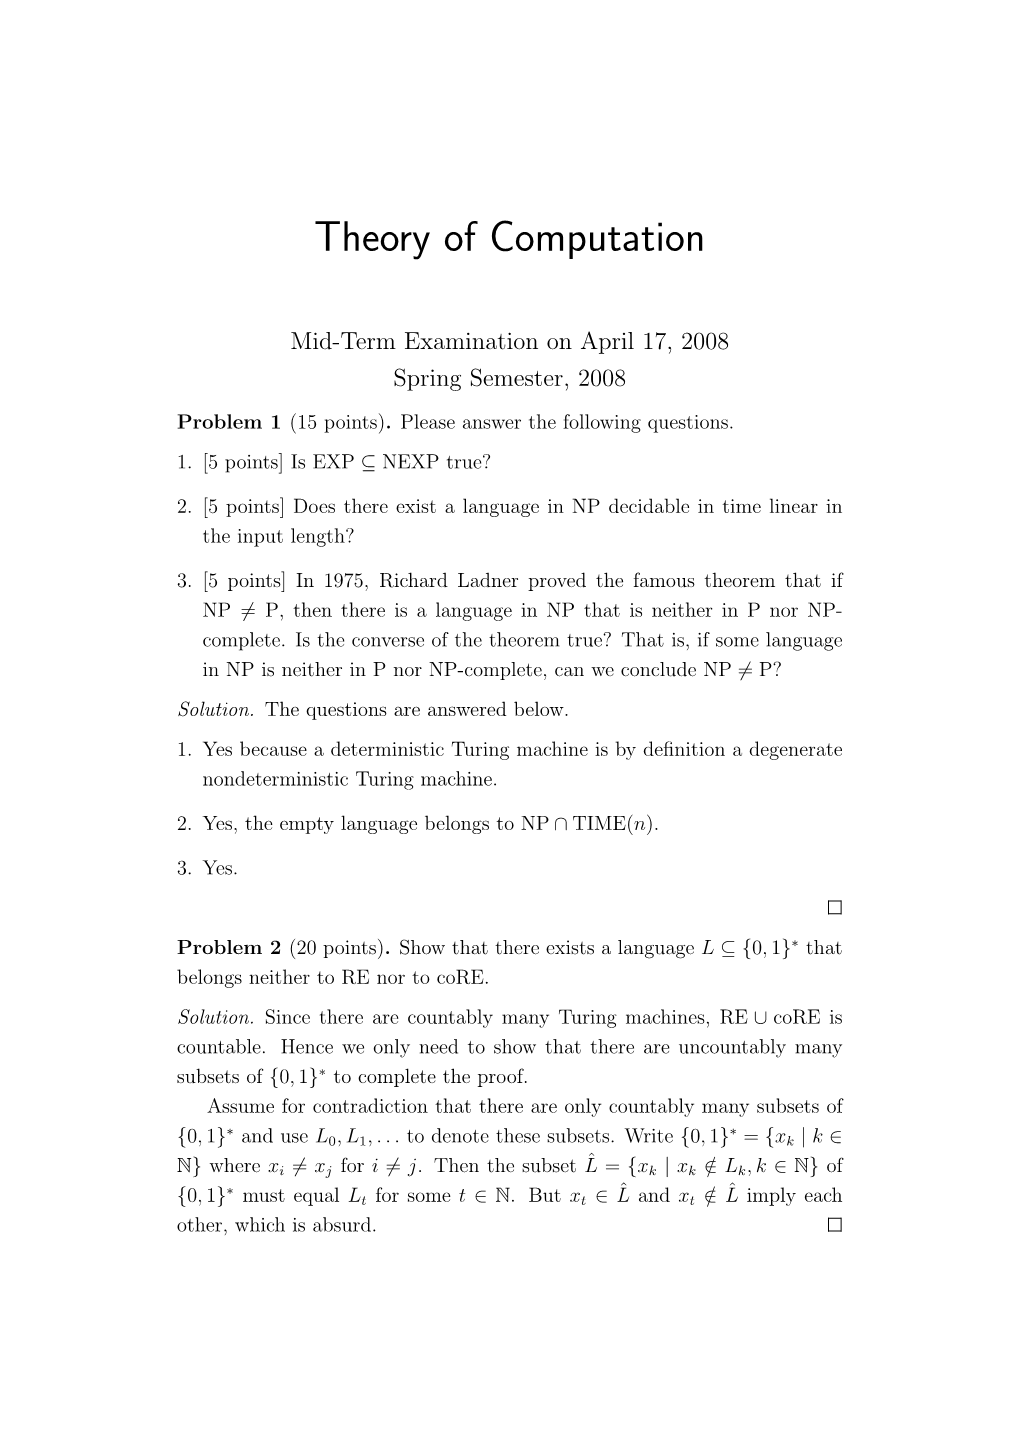 Theory of Computation